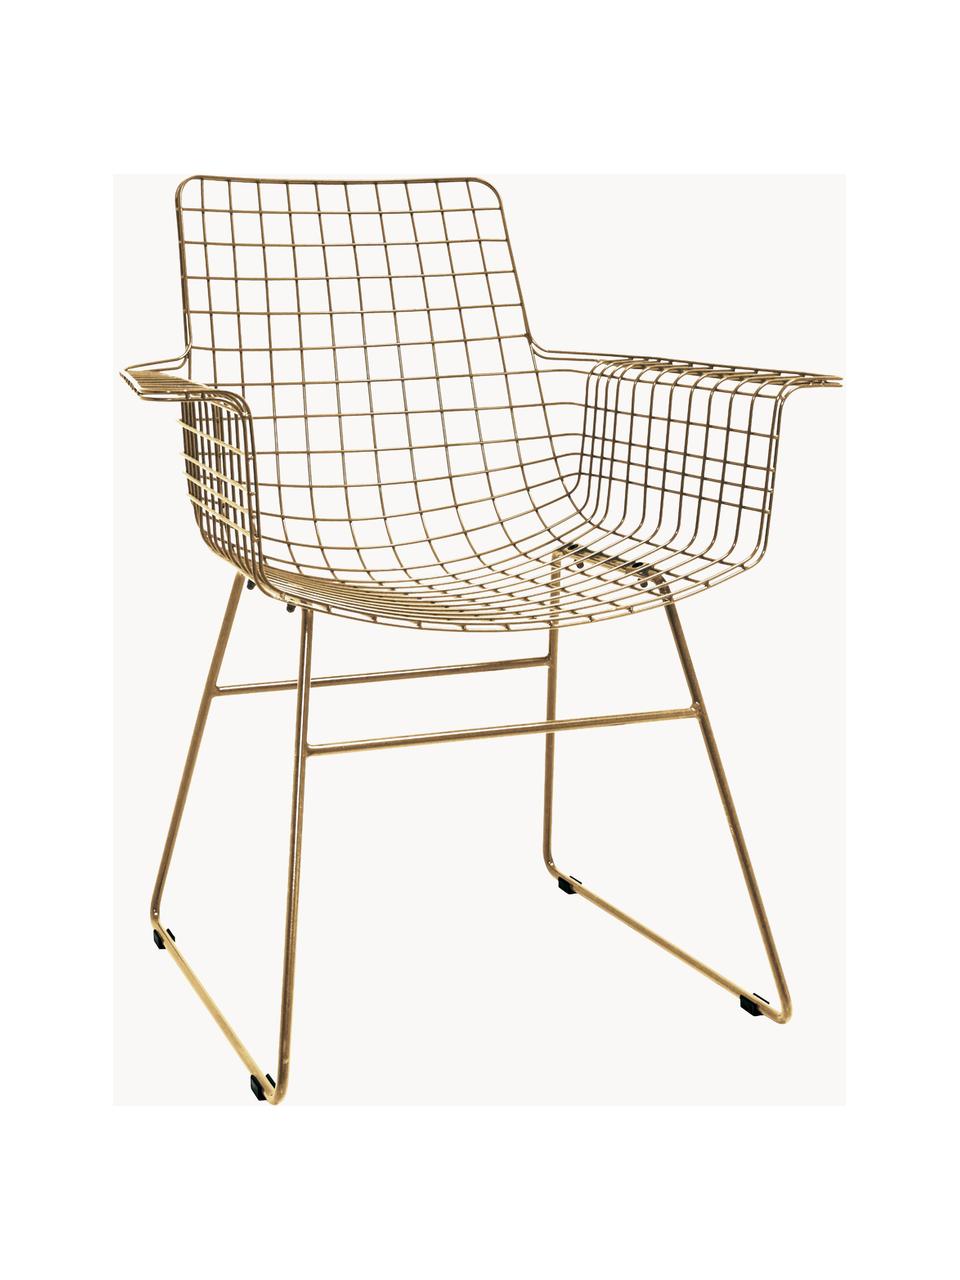 Kovová židle s područkami Wire, Kov s práškovým nástřikem, Mosazná, Š 72 cm, H 56 cm